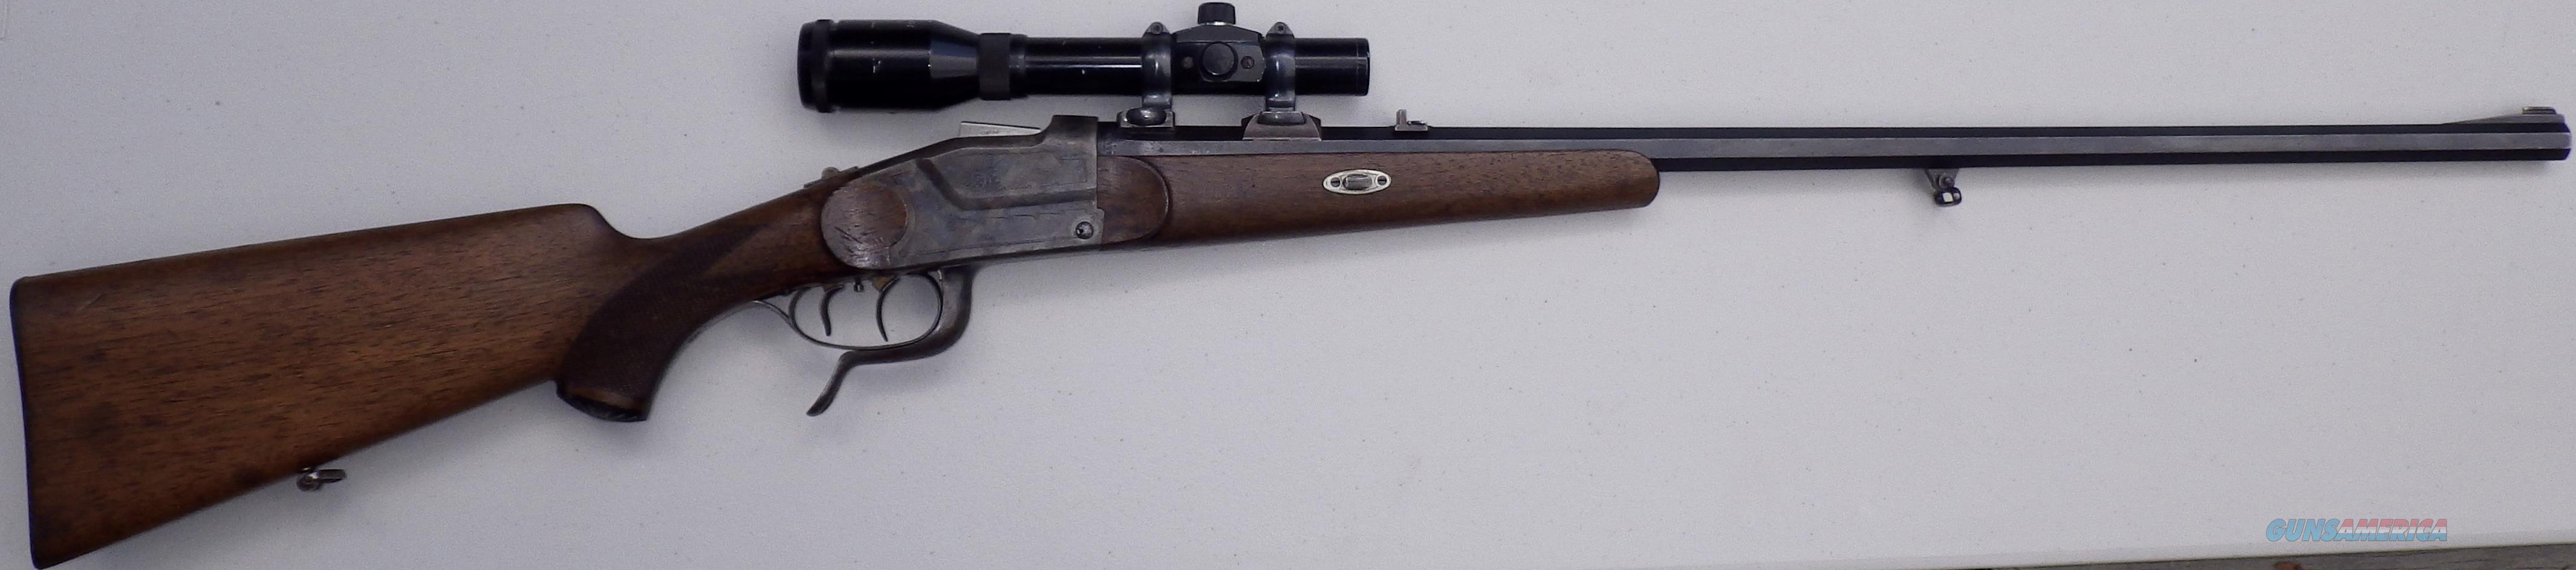 Henry rifle custom serial number 2473559